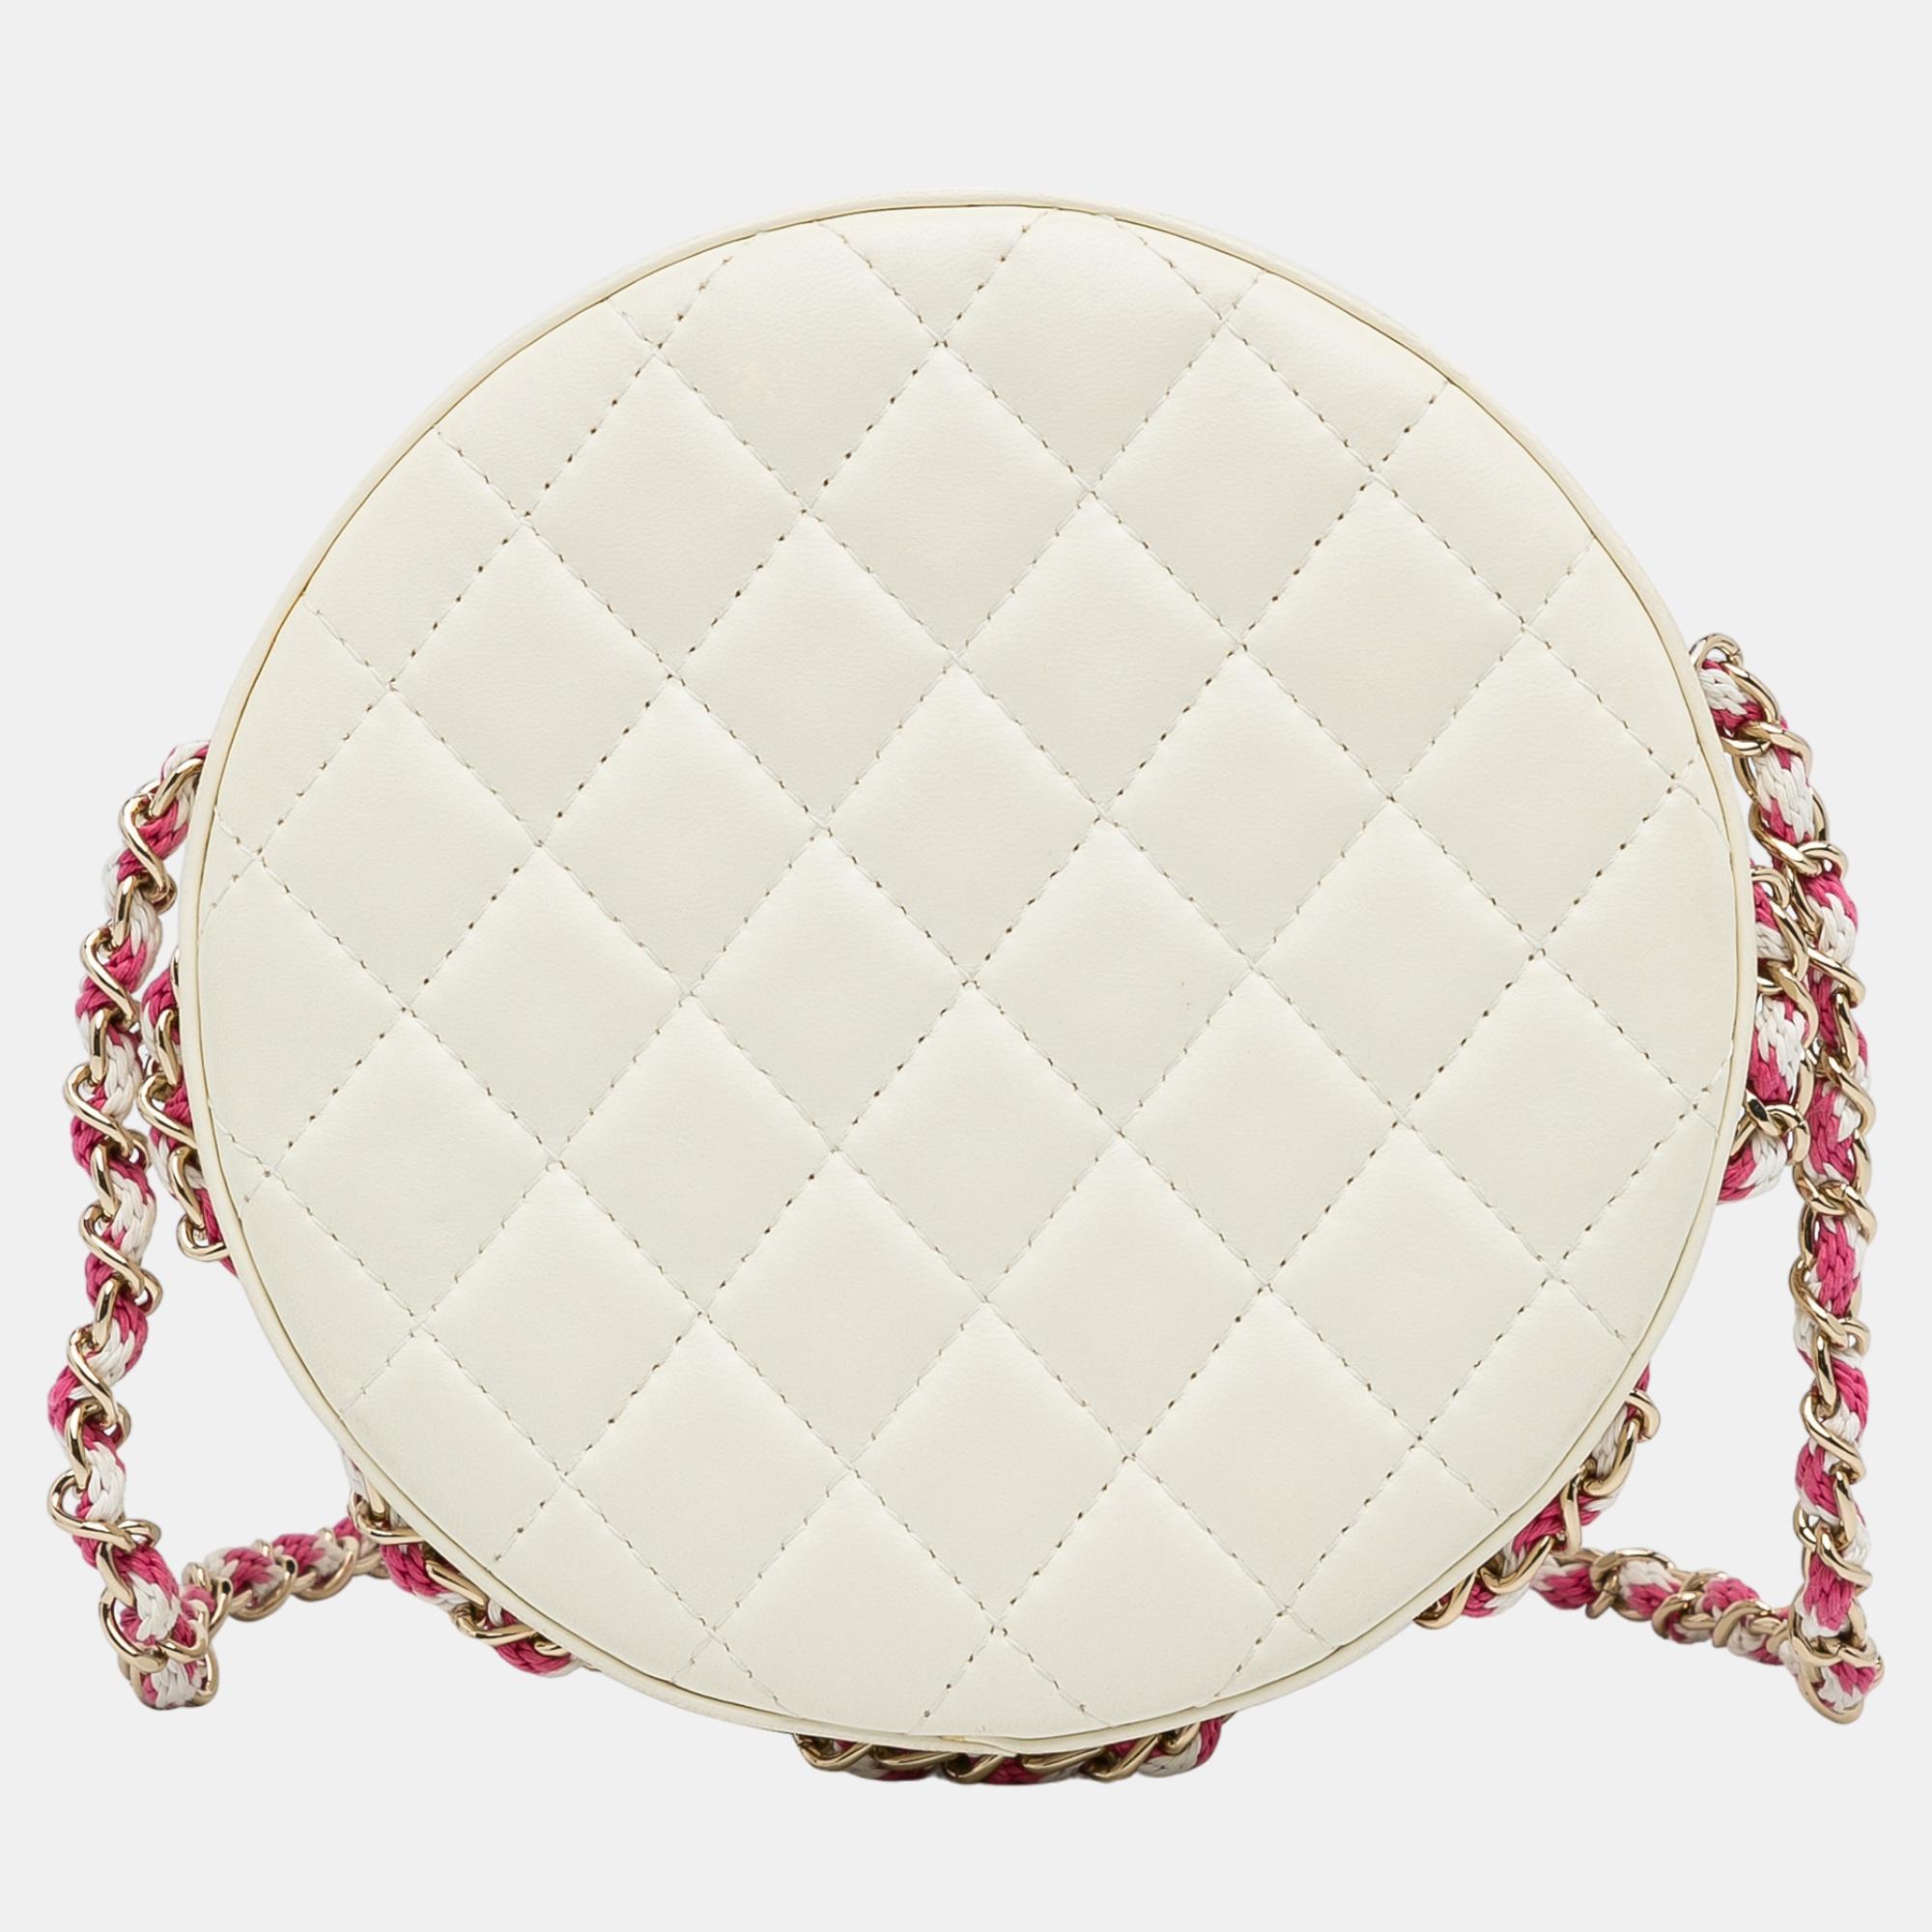 Chanel Pink/White La Pausa Crossbody Bag